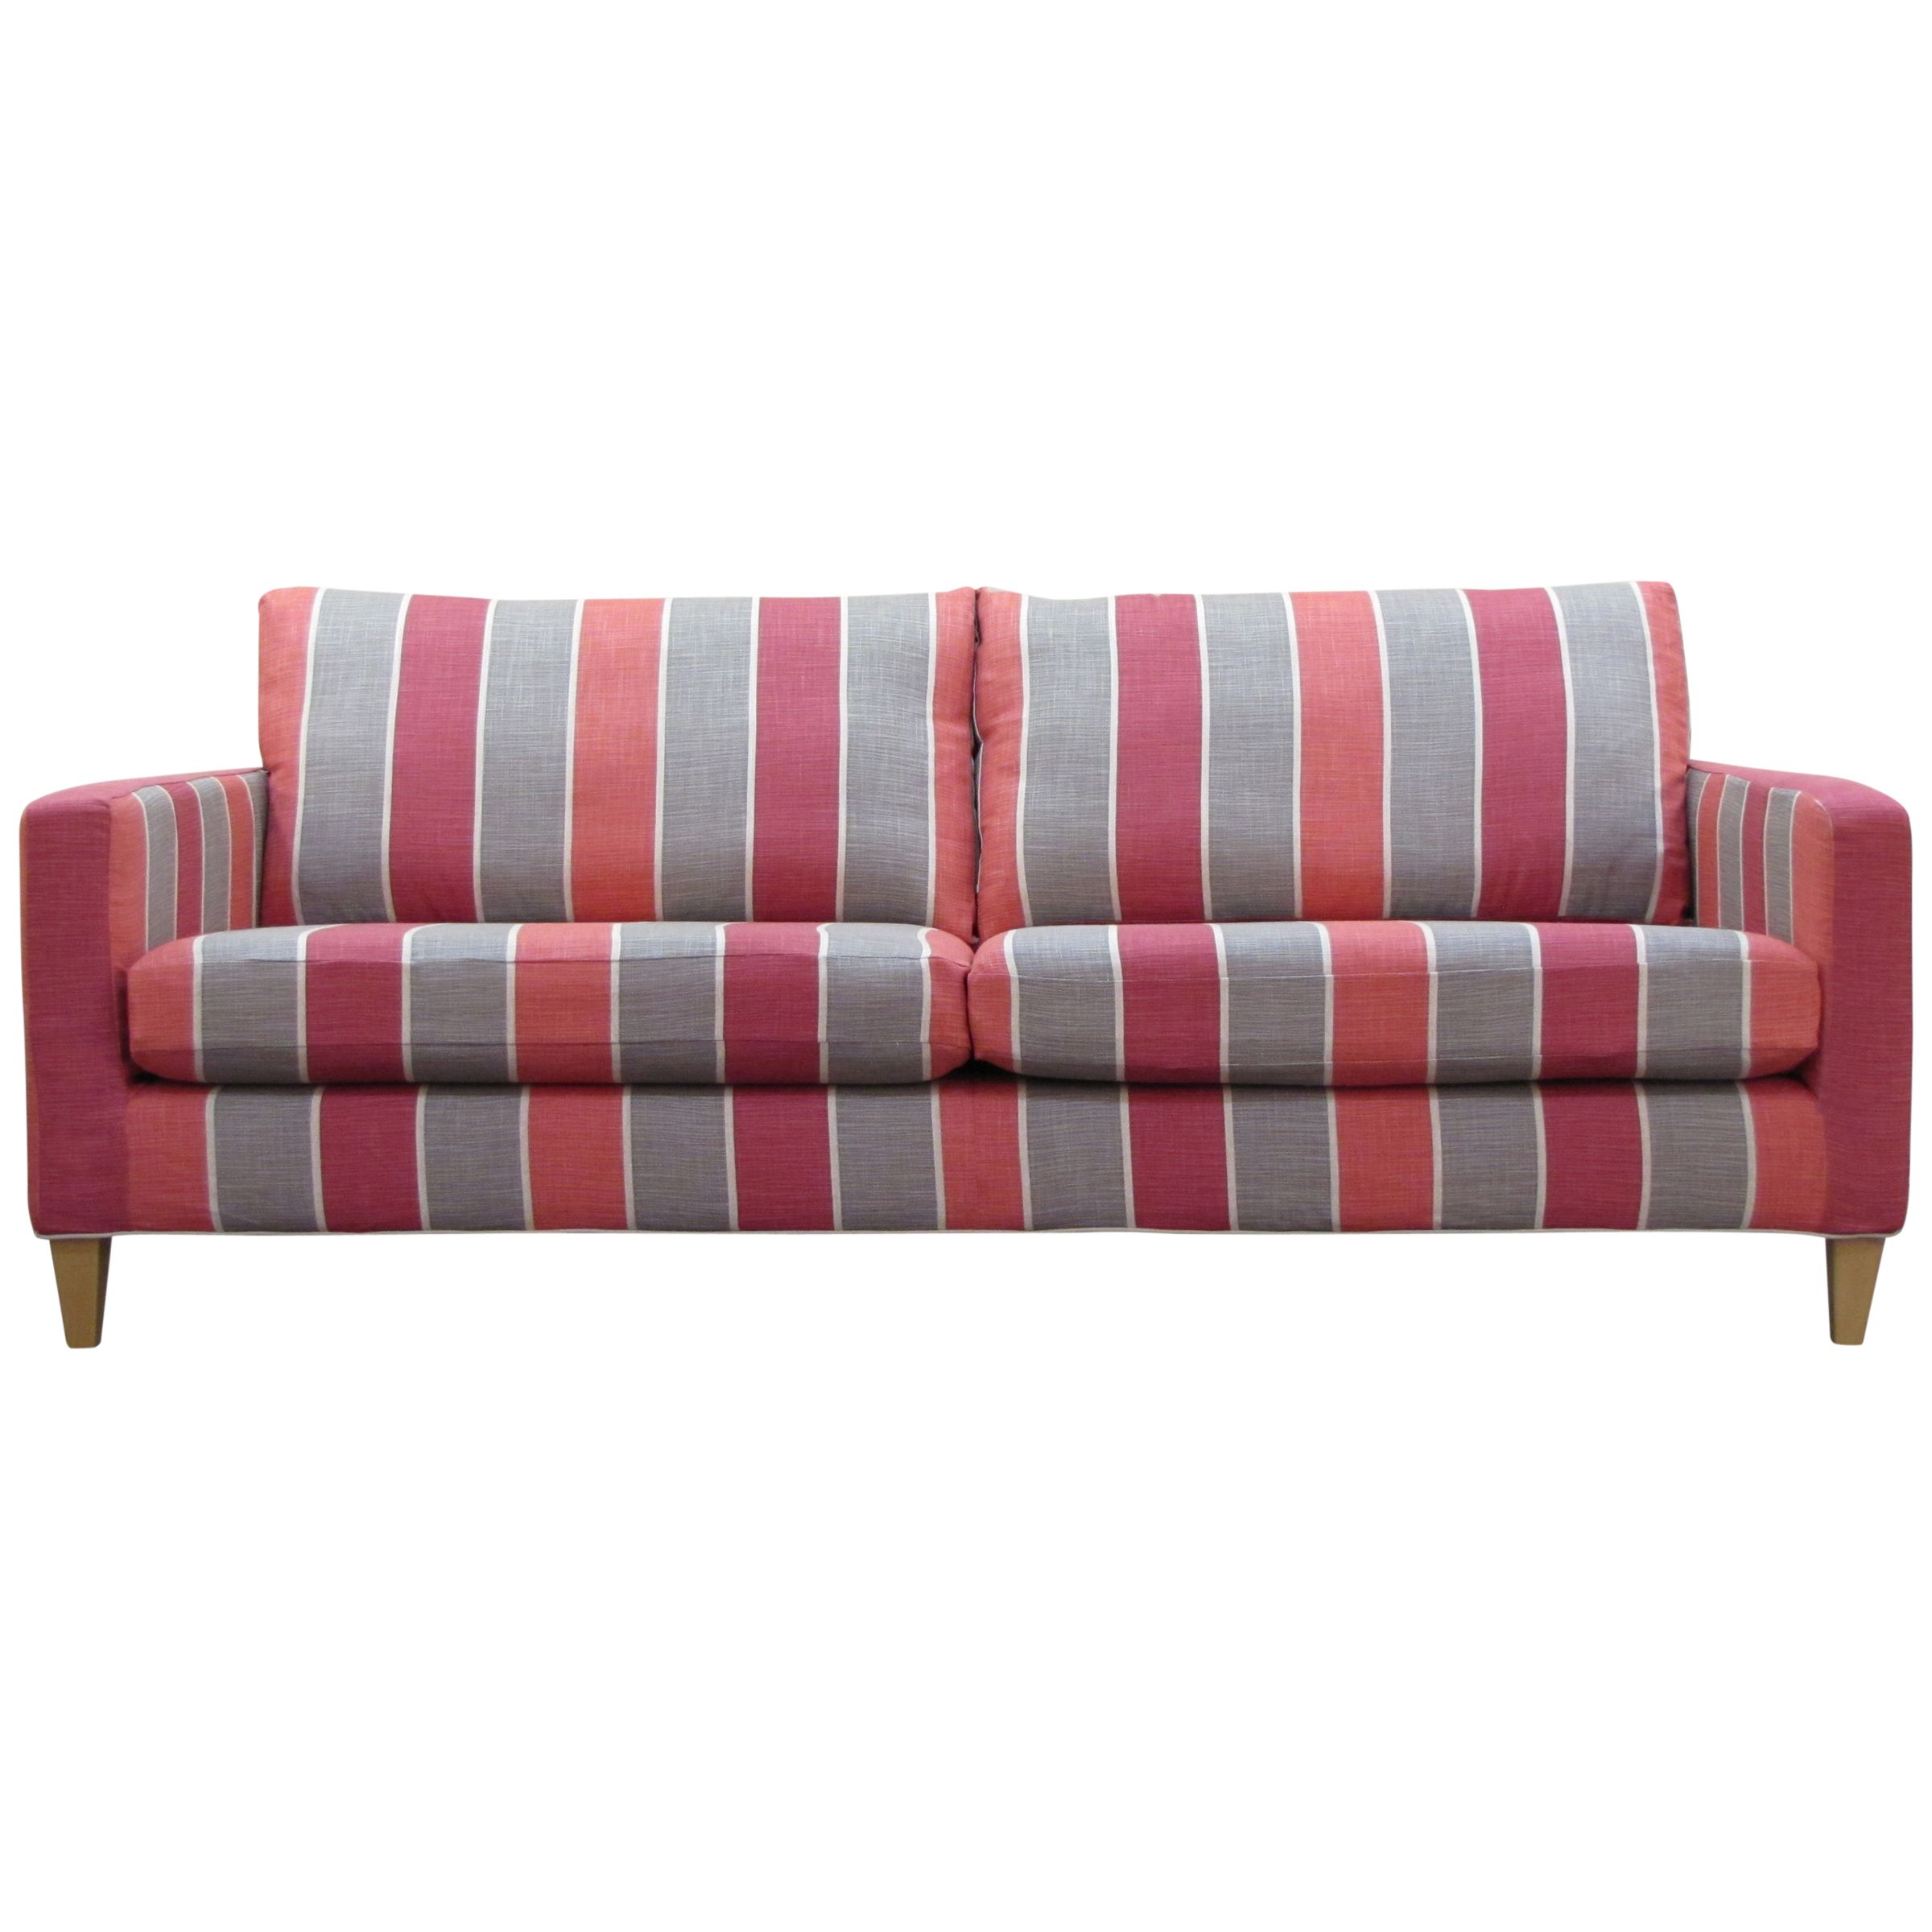 John Lewis Bailey Grand Sofa, Delaware Stripe, Tuscany, width 214cm